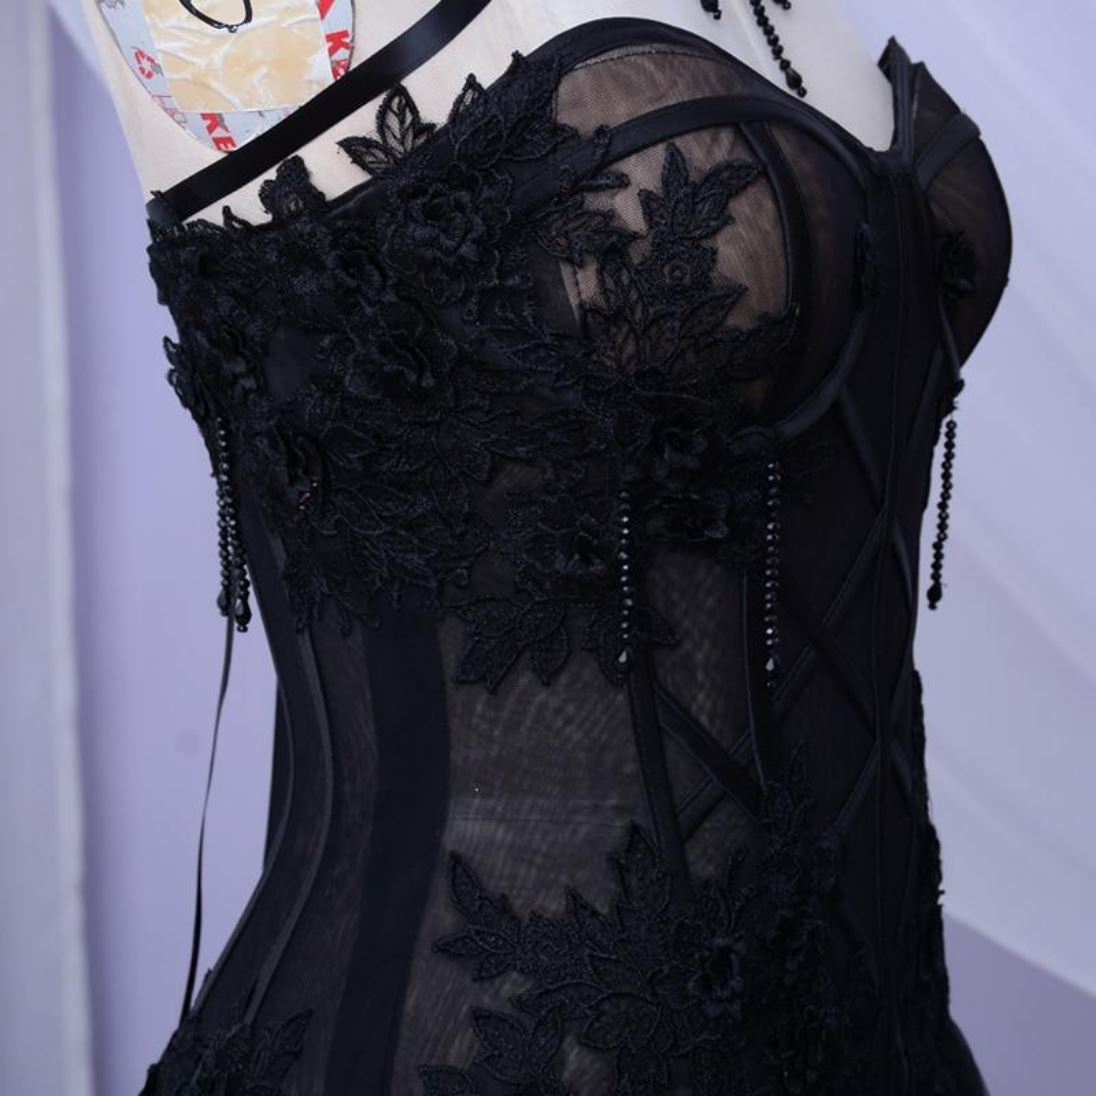 High-neck line Gothic Black Long Bridal Gowns Vintage Wedding Dresses BlissGown 